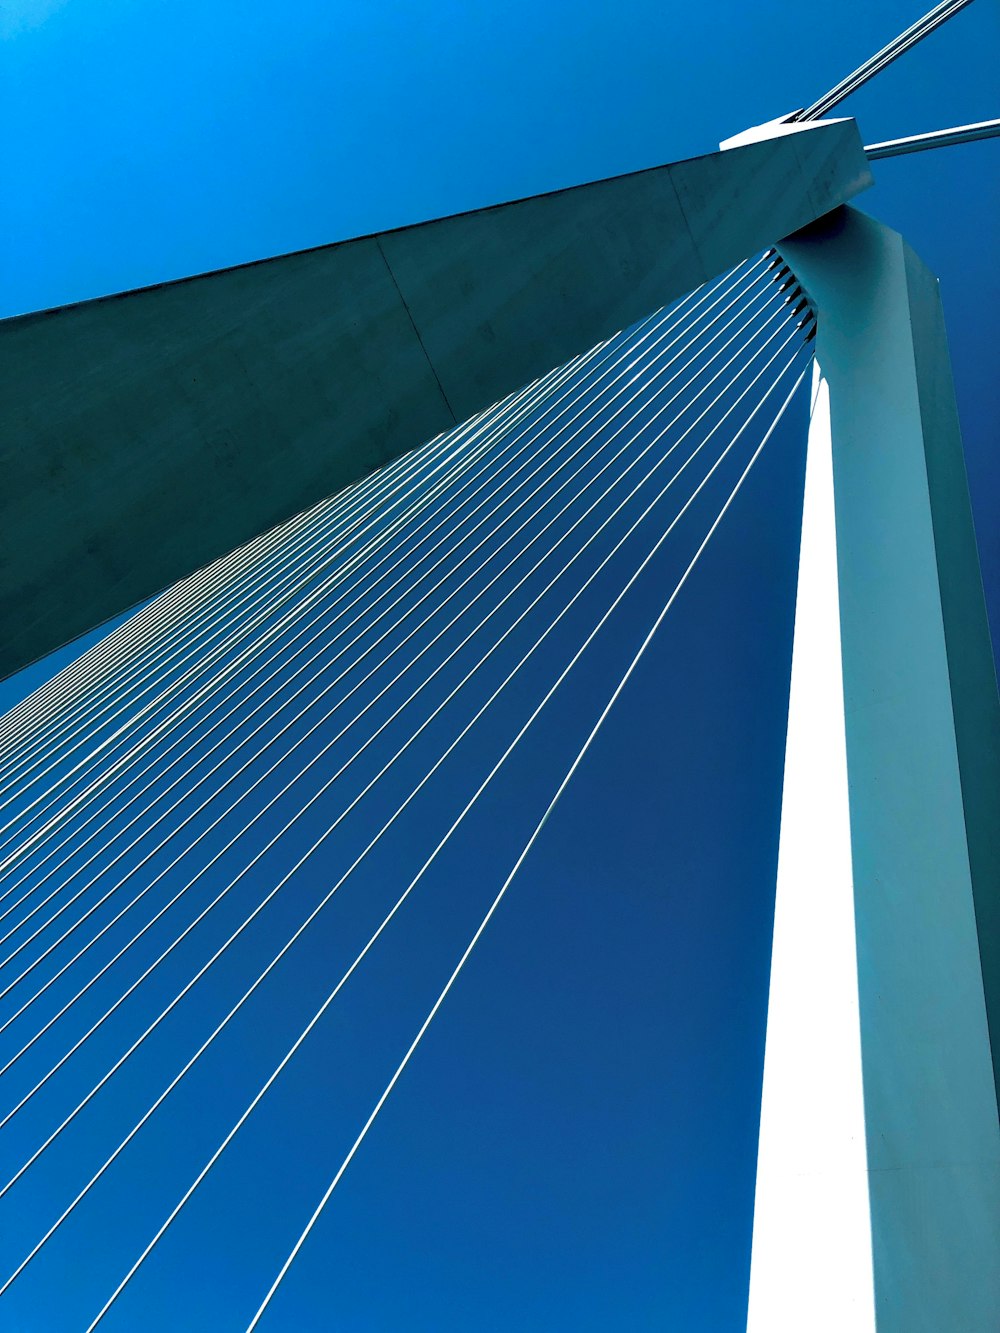 white and blue bridge under blue sky during daytime